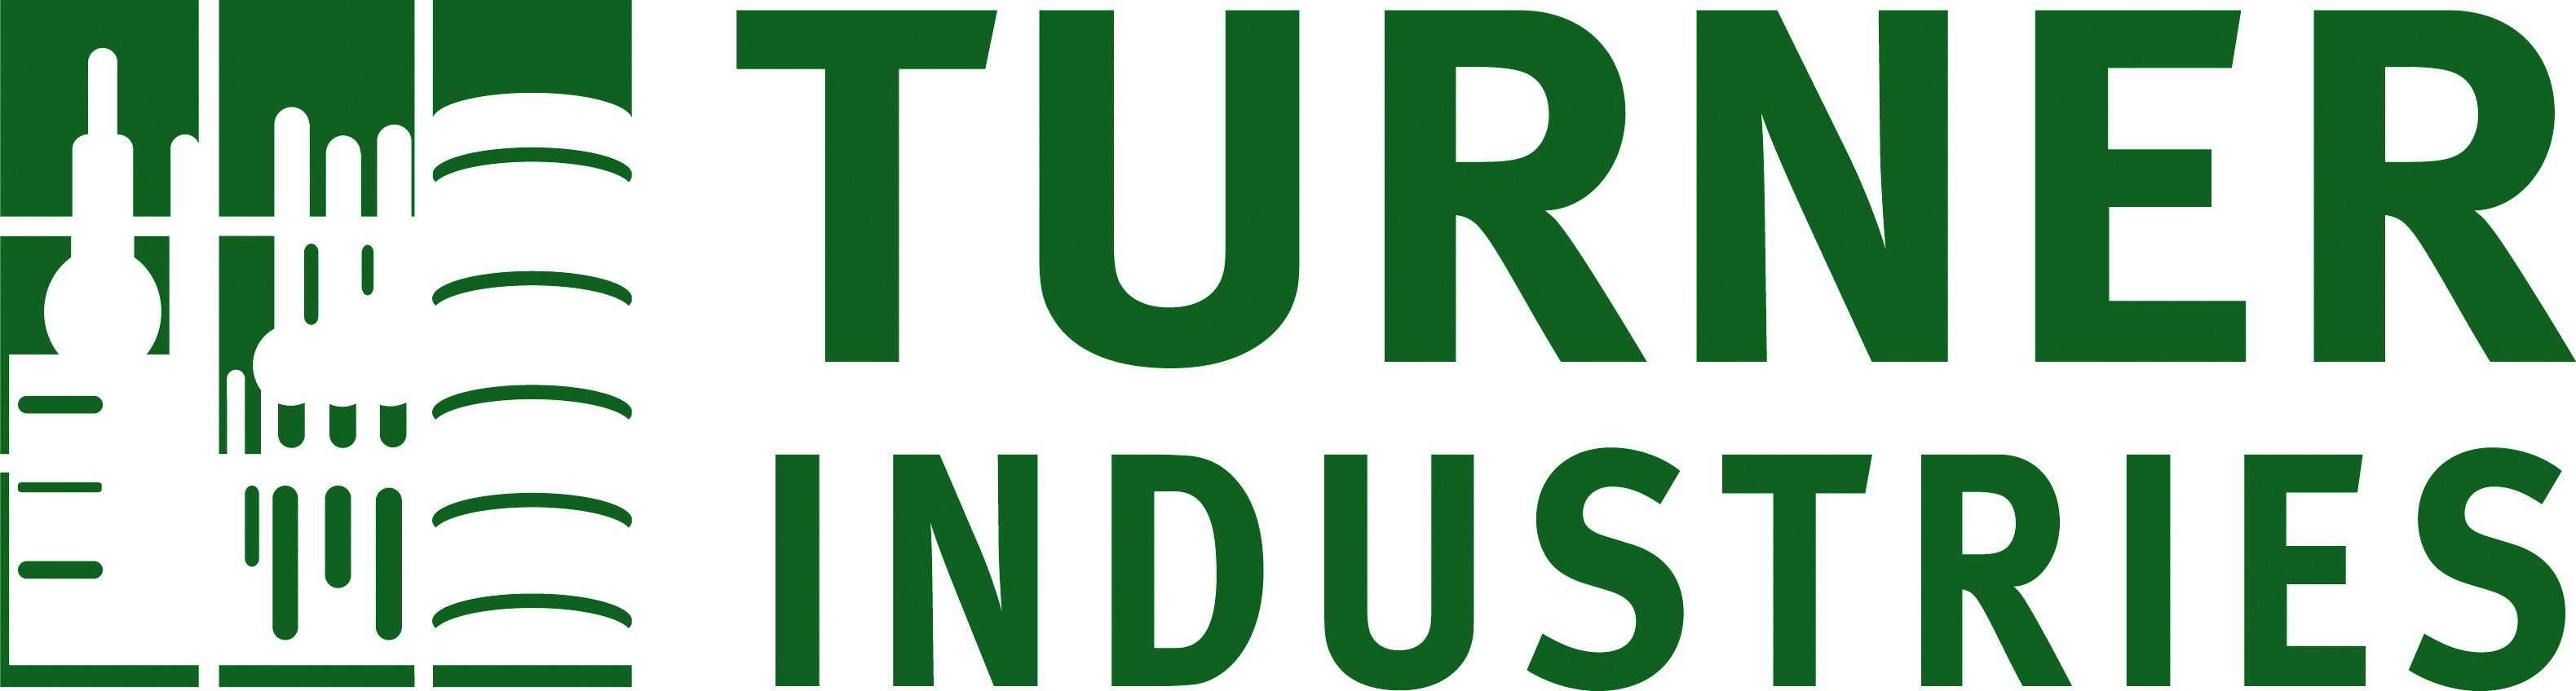 Turner logo green